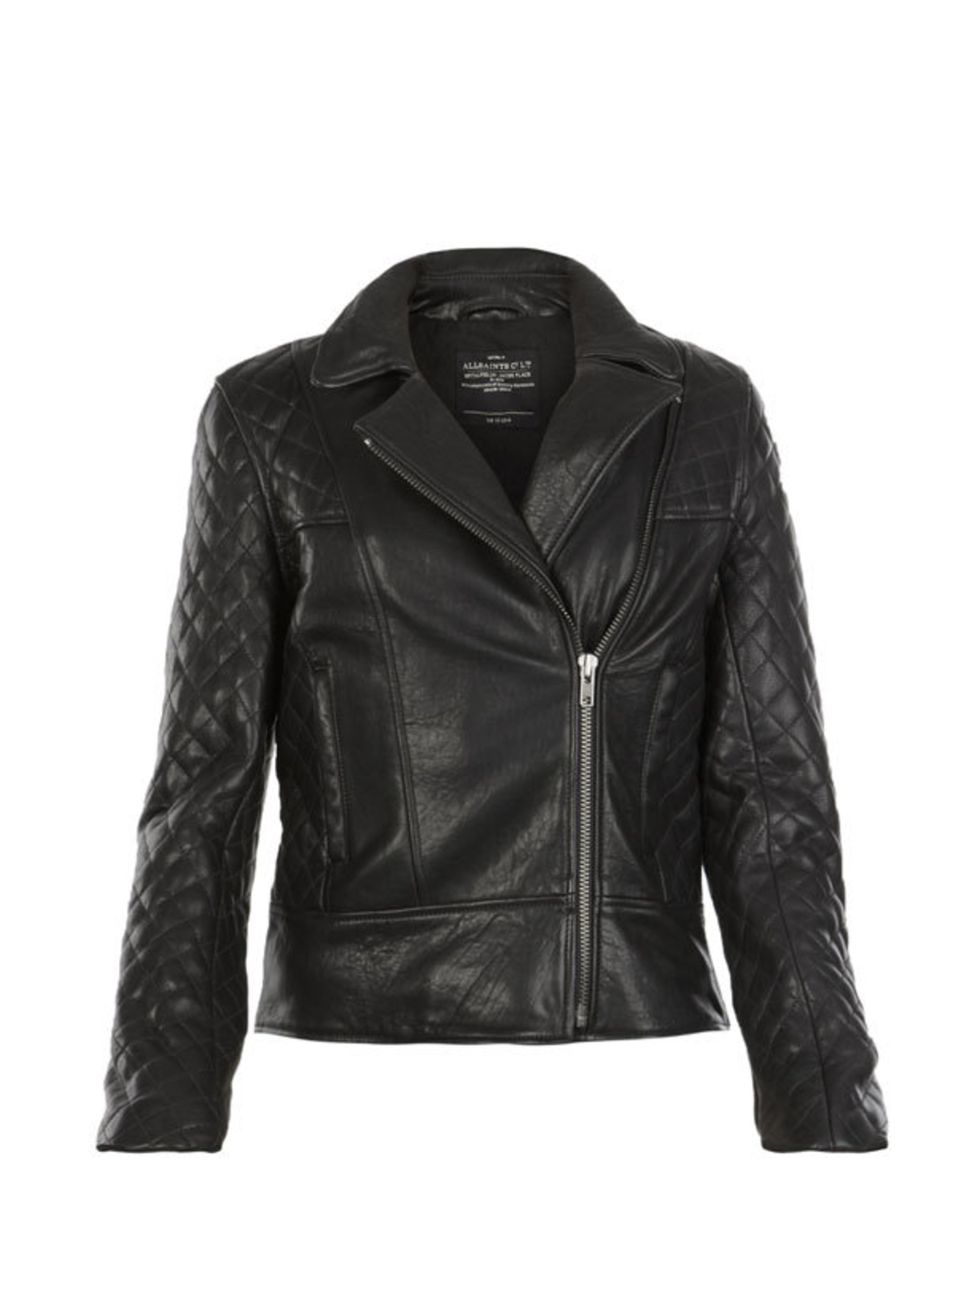 <p><a href="http://www.allsaints.com/women/leather_jackets/allsaints-rally-jacket/?colour=5&amp;category=651">All Saints</a> 'Rally' leather jacket, £395</p>